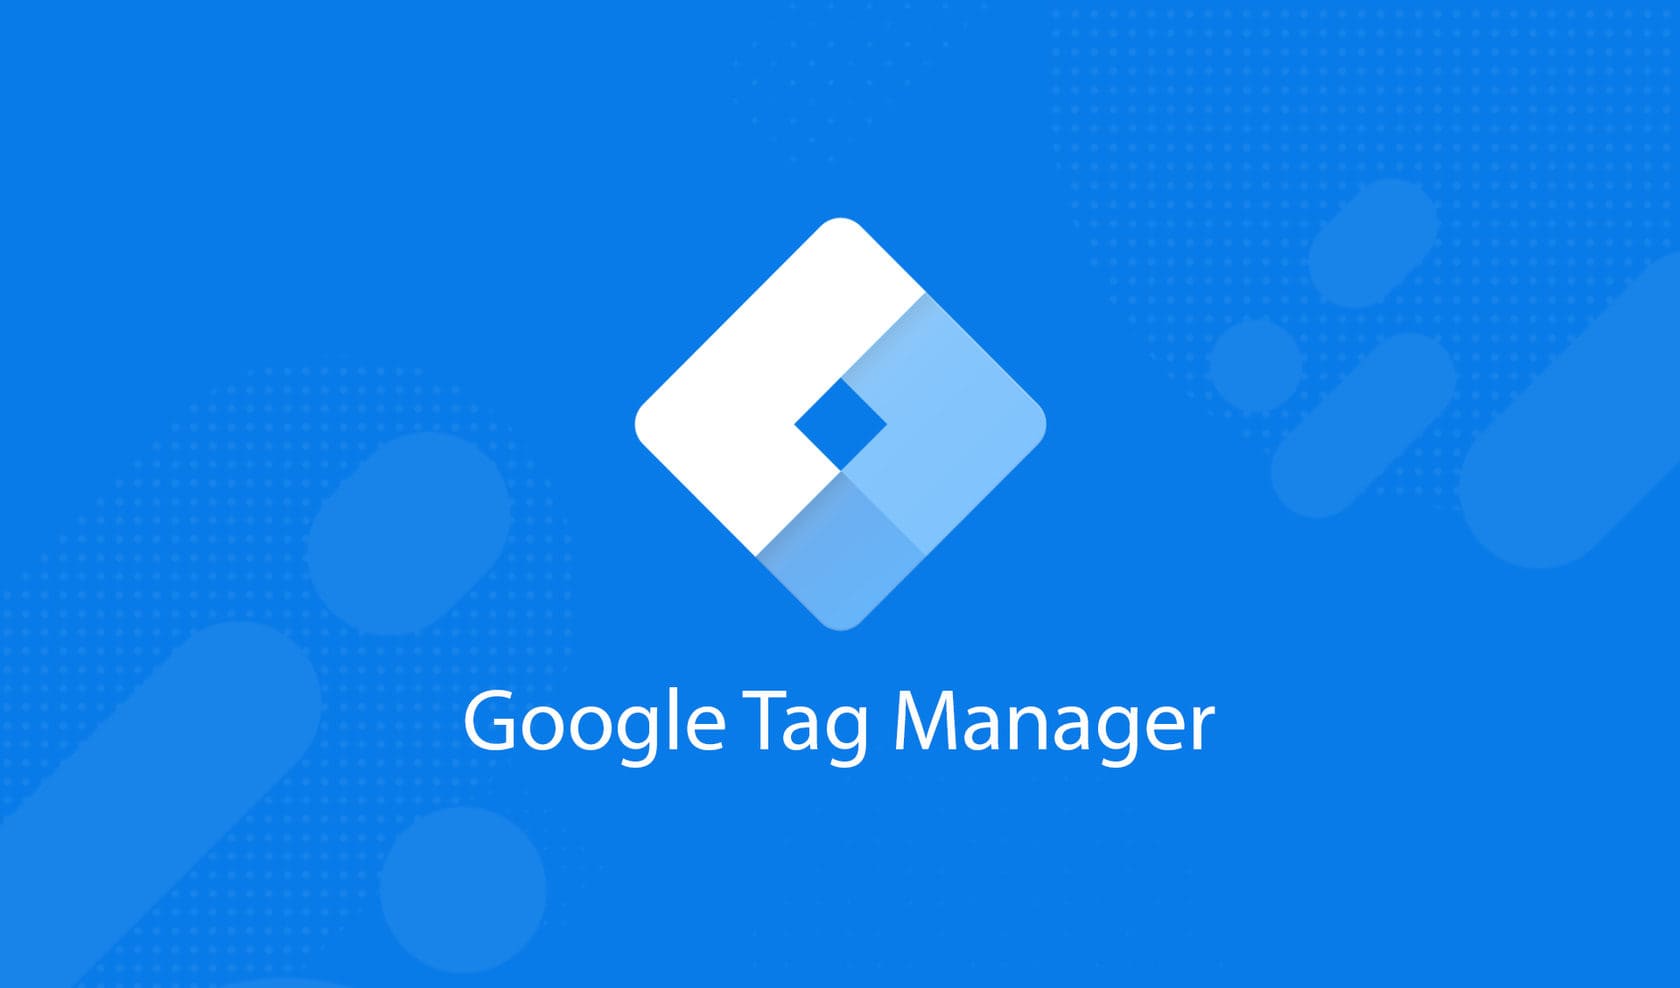 Google Tag Manager Nedir?